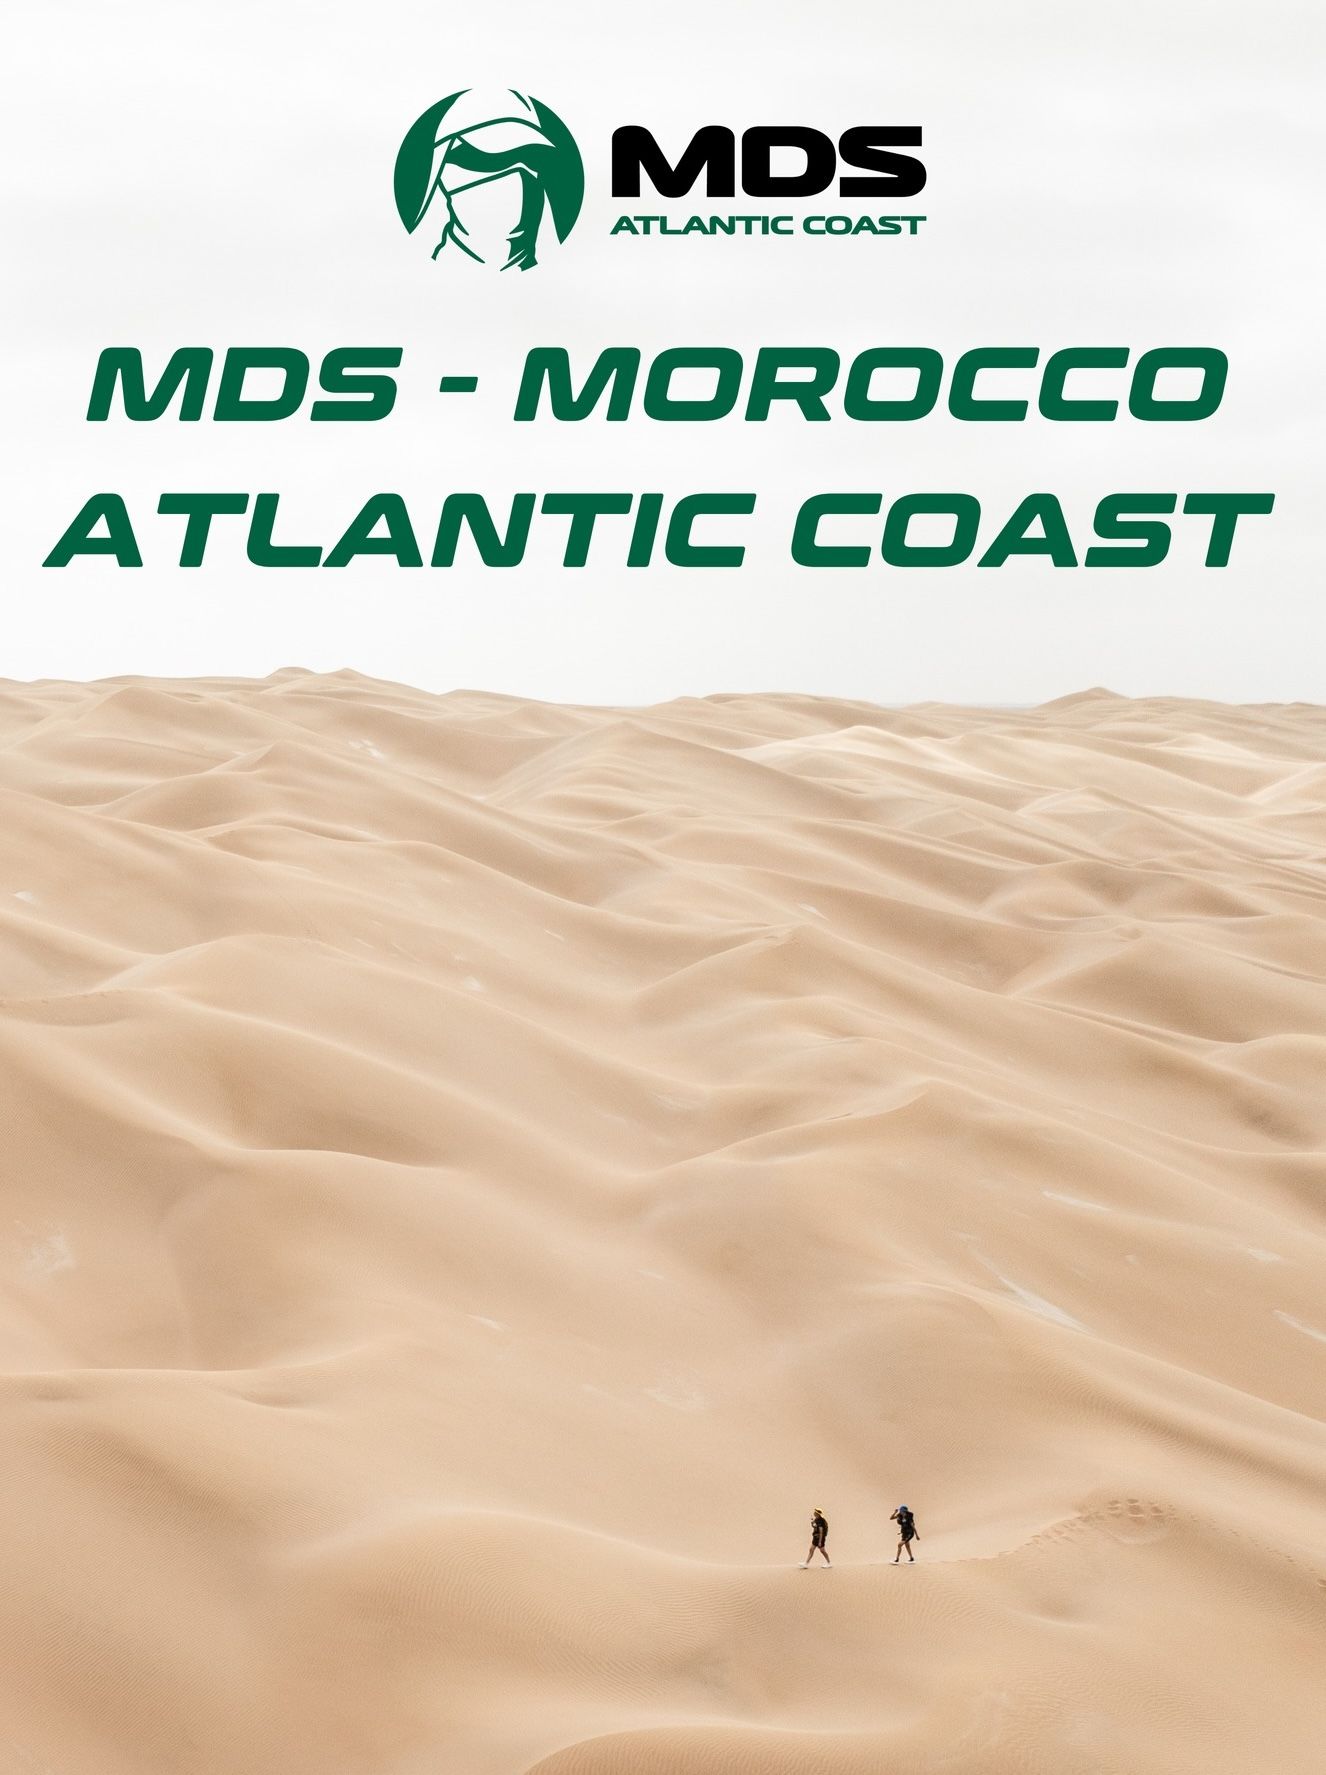 MDS Atlantic Coast